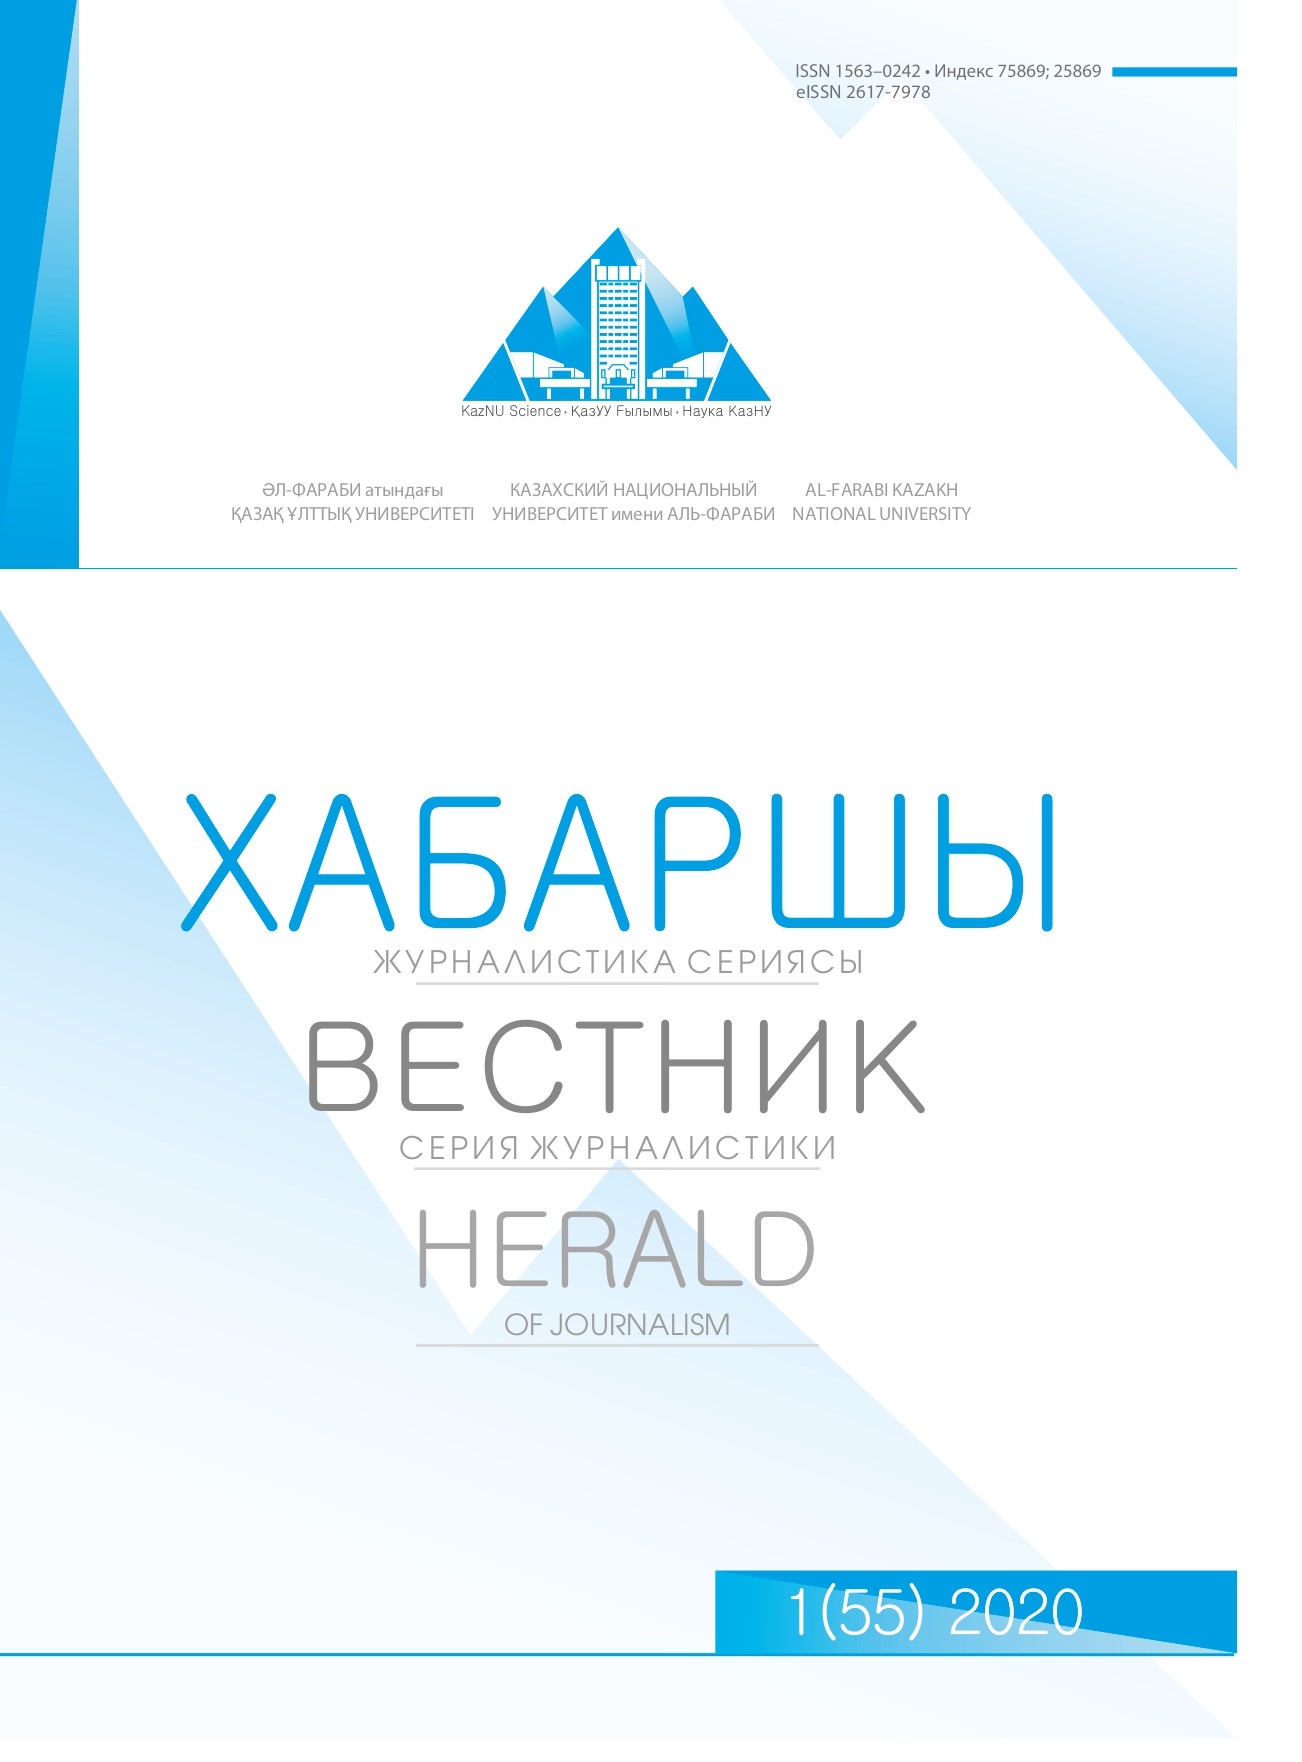 					View Vol. 55 No. 1 (2020): Al-Farabi kazakh national university. Herald of journalism
				